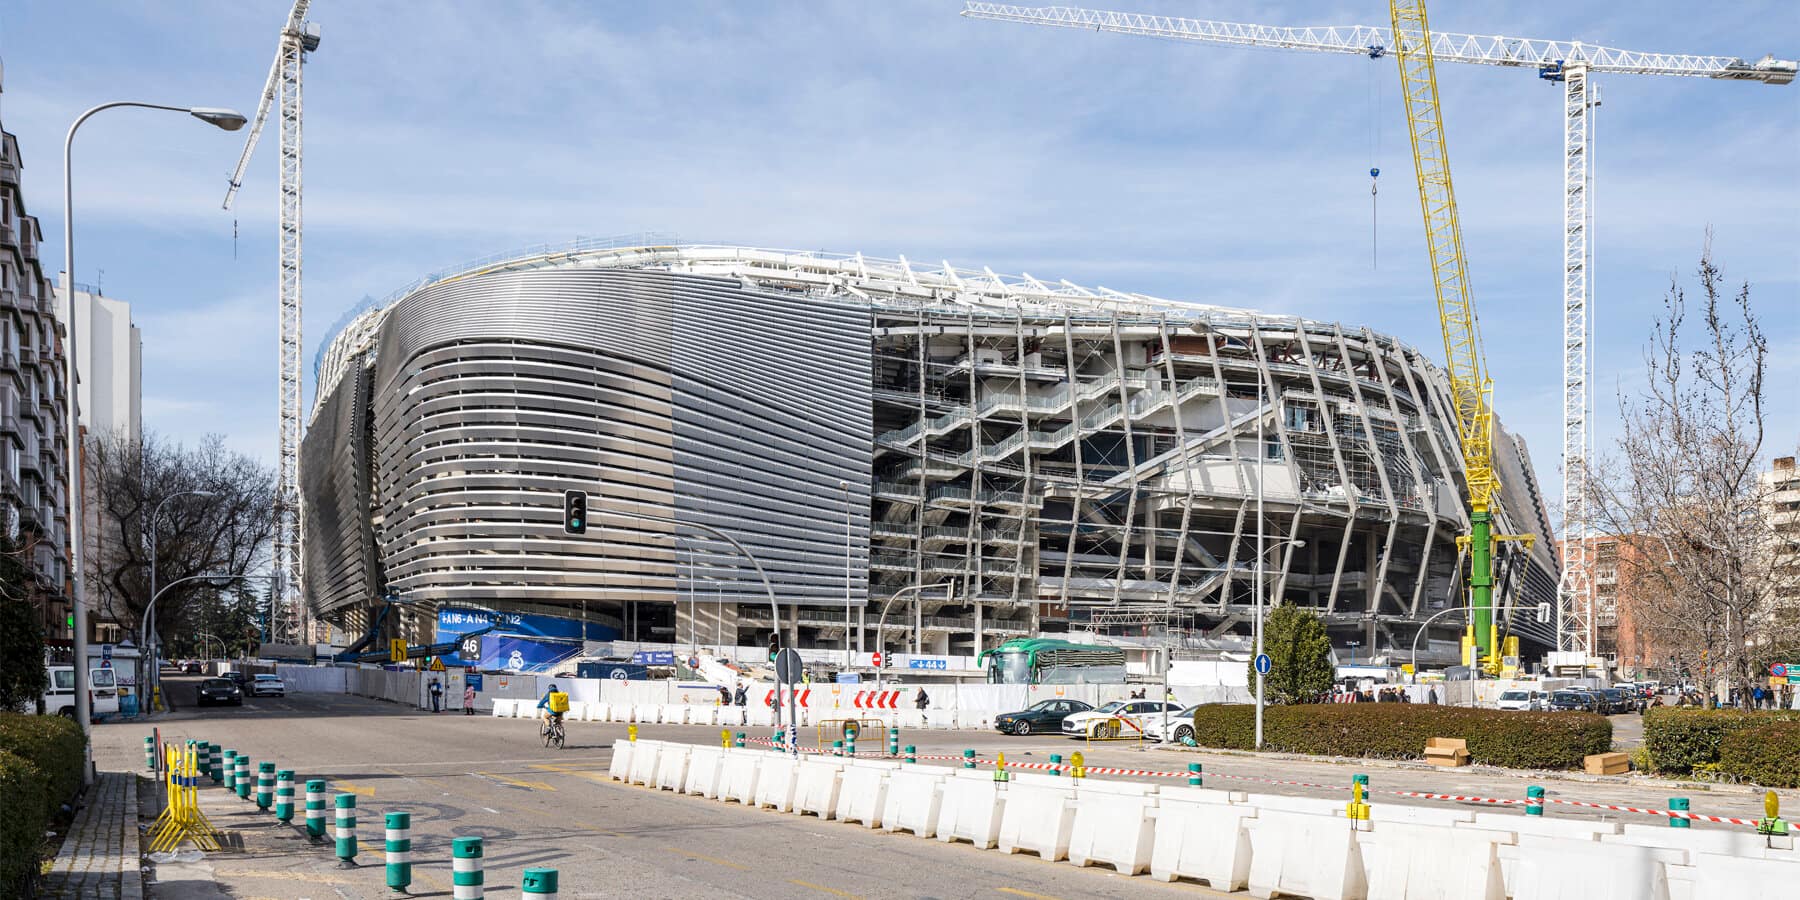 gmp shares construction progress of real madrid’s revamped santiago bernabéu stadium